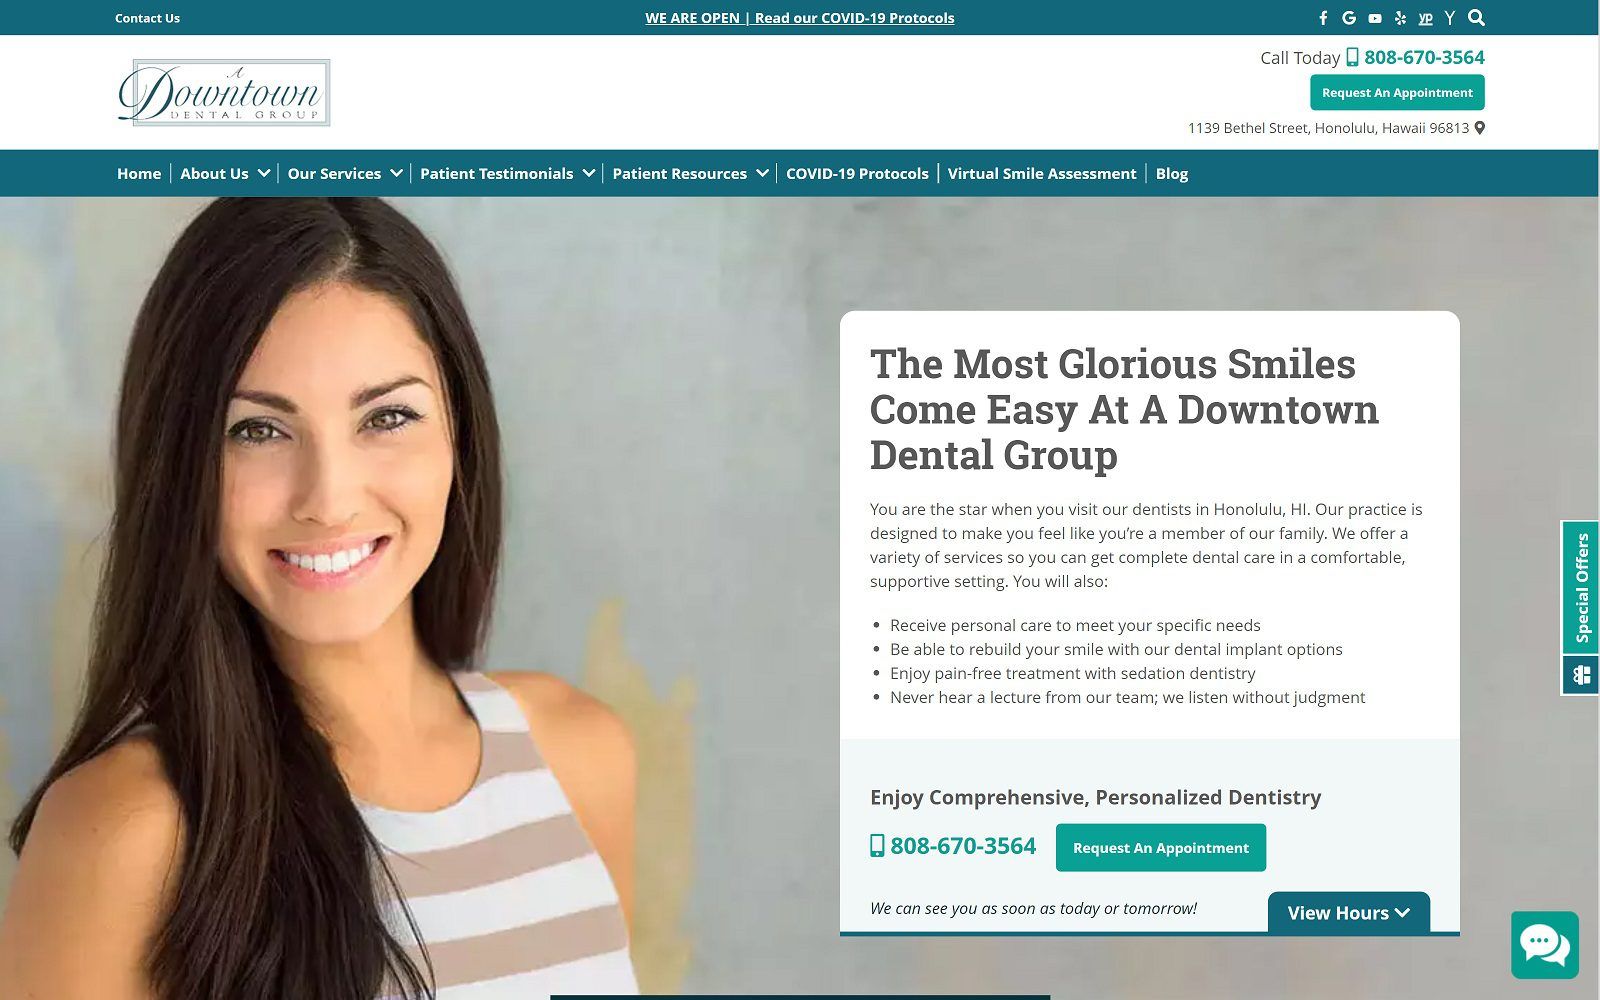 The screenshot of a downtown dental group website